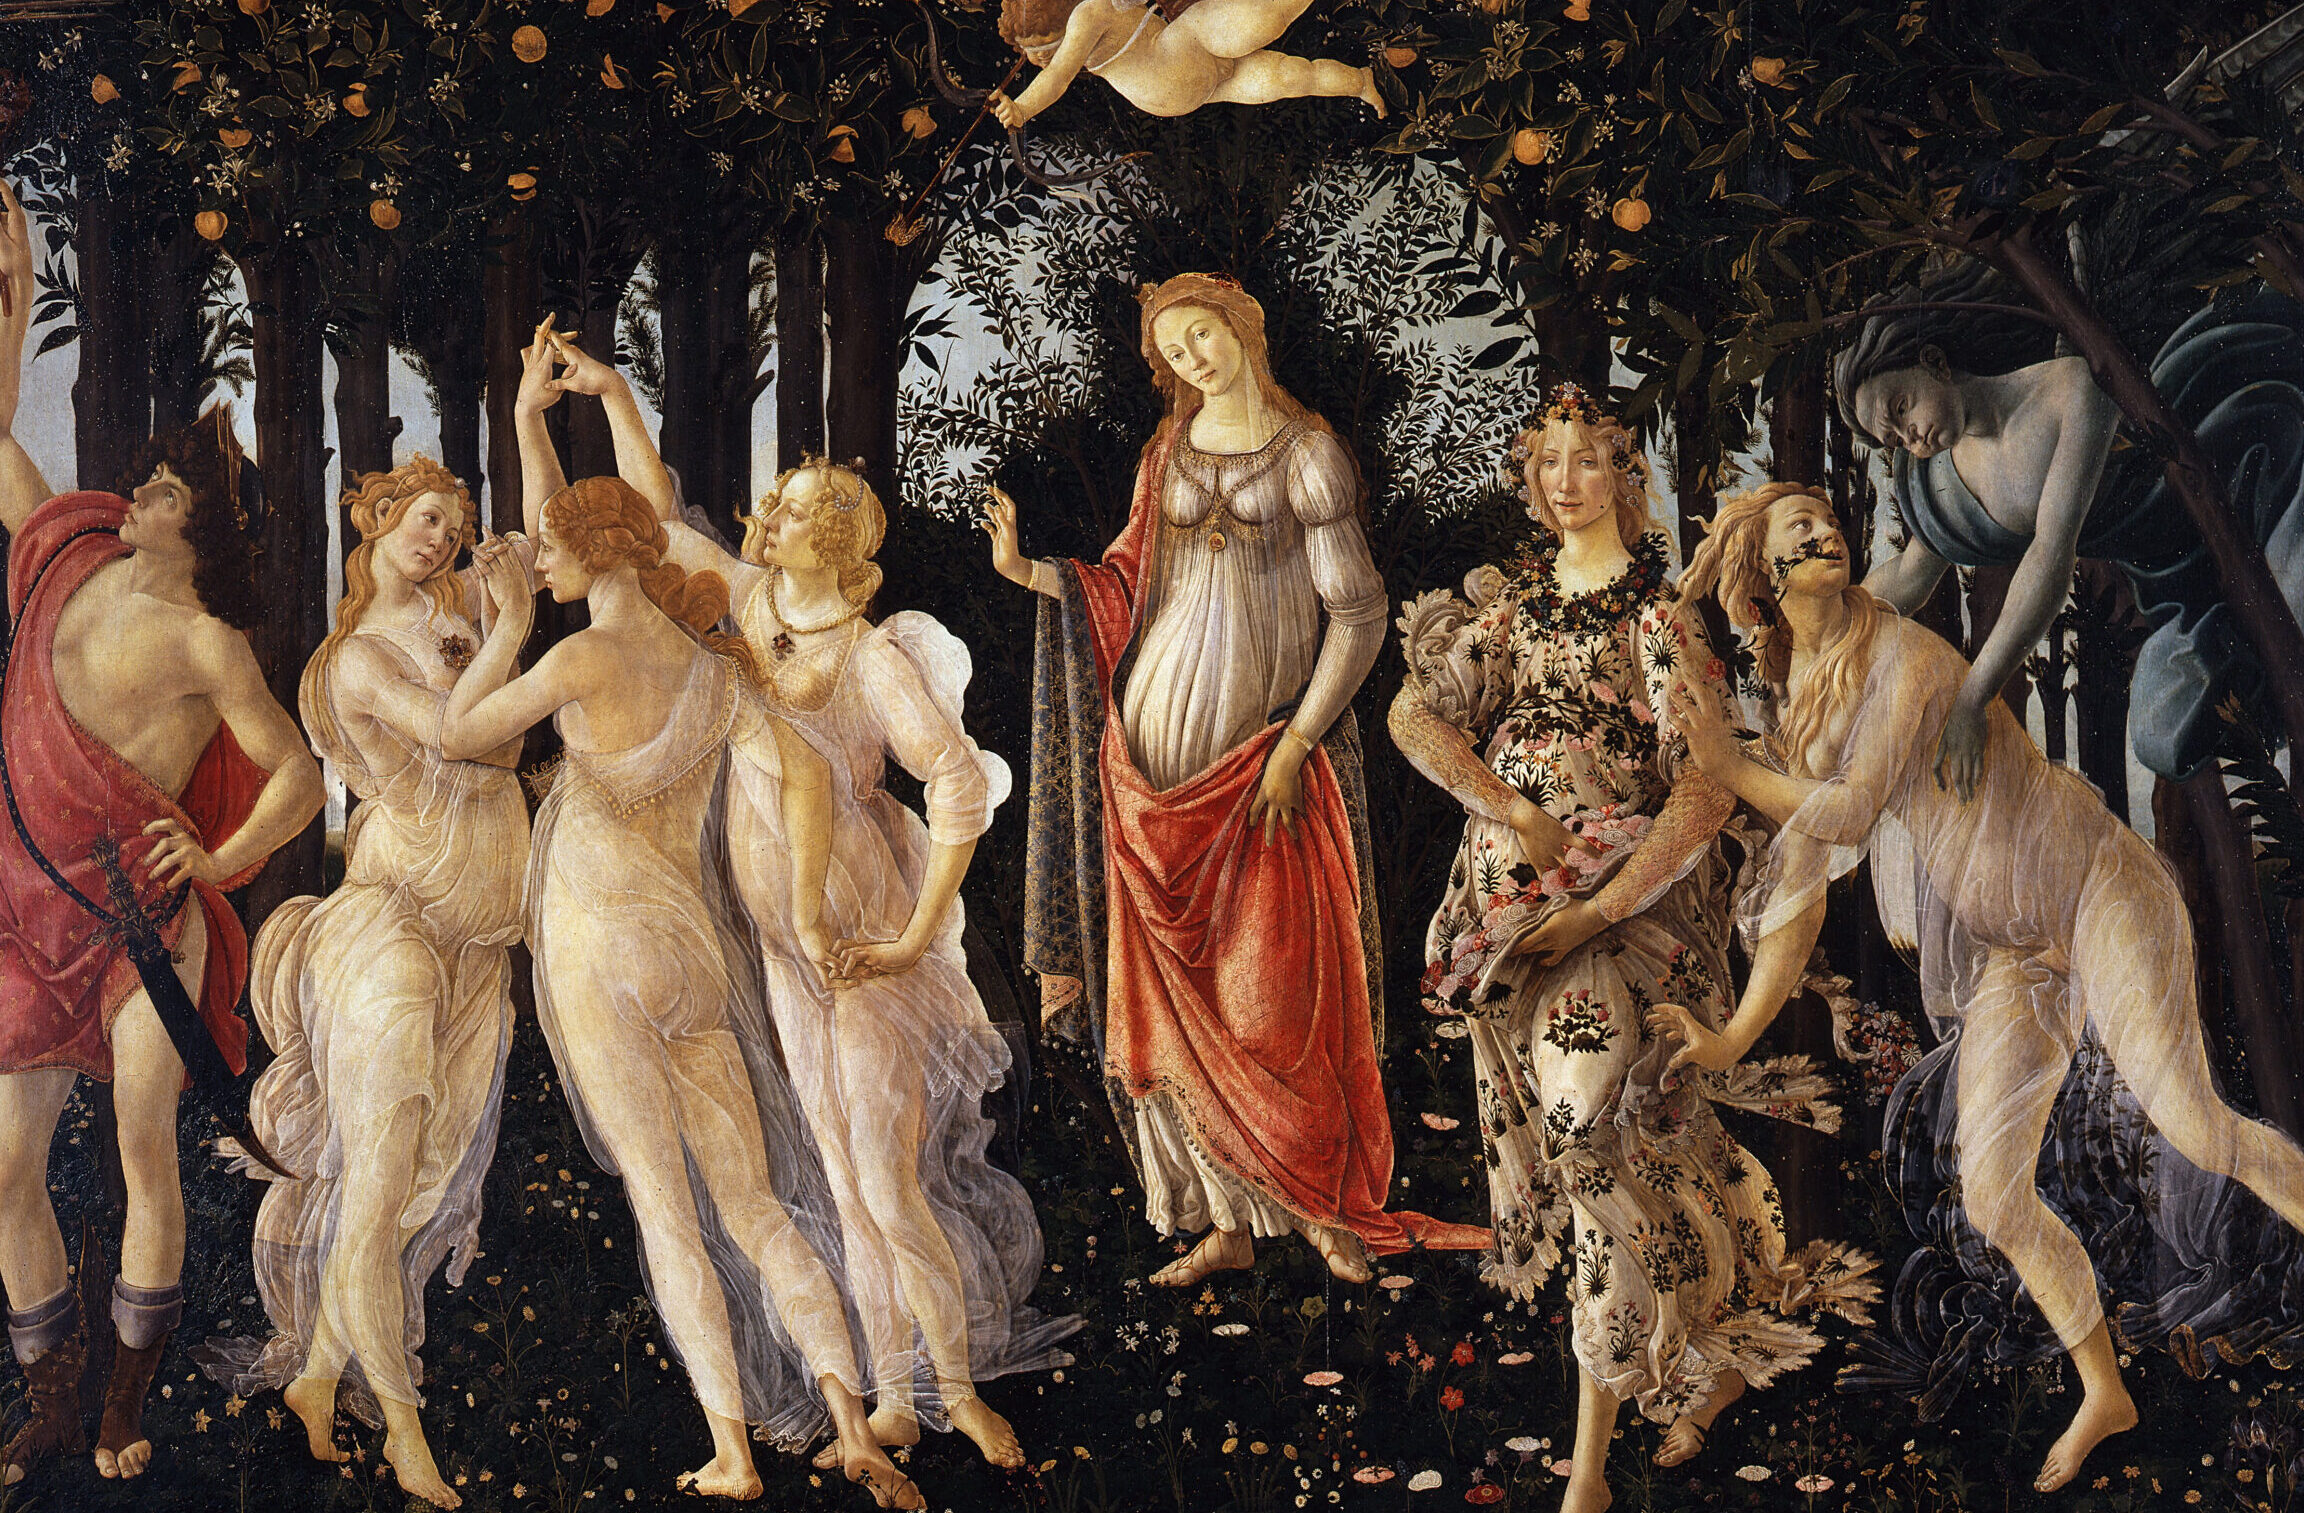 Obras destacadas de Botticelli: Belleza renacentista en lienzos.